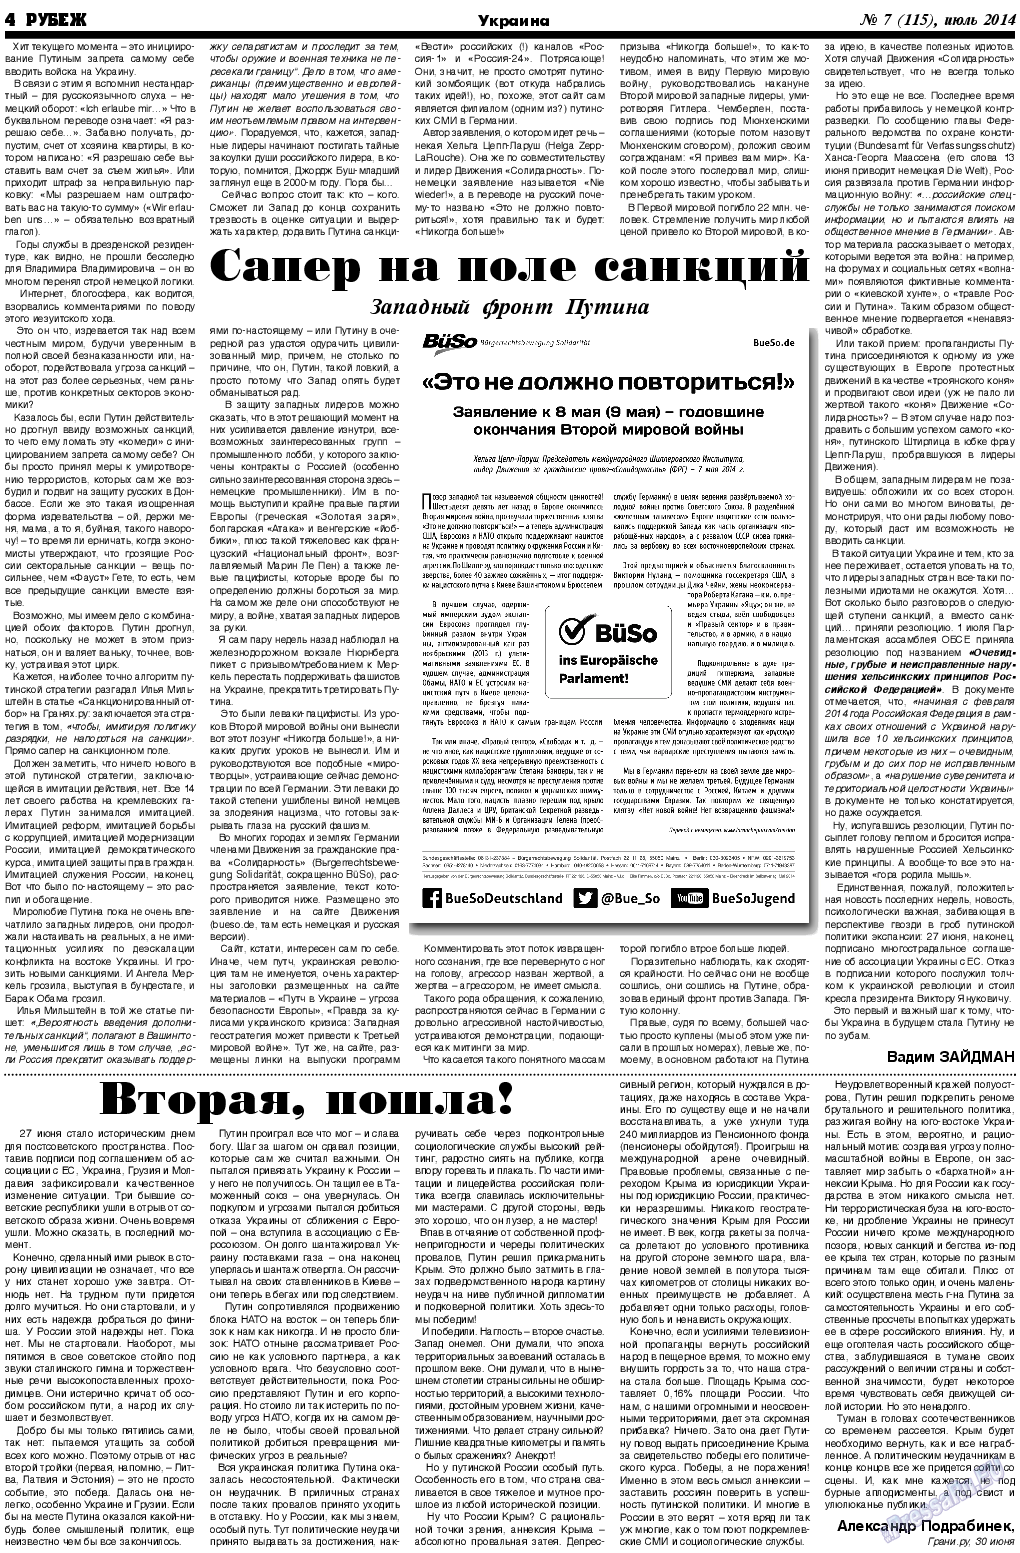 Рубеж, газета. 2014 №7 стр.4